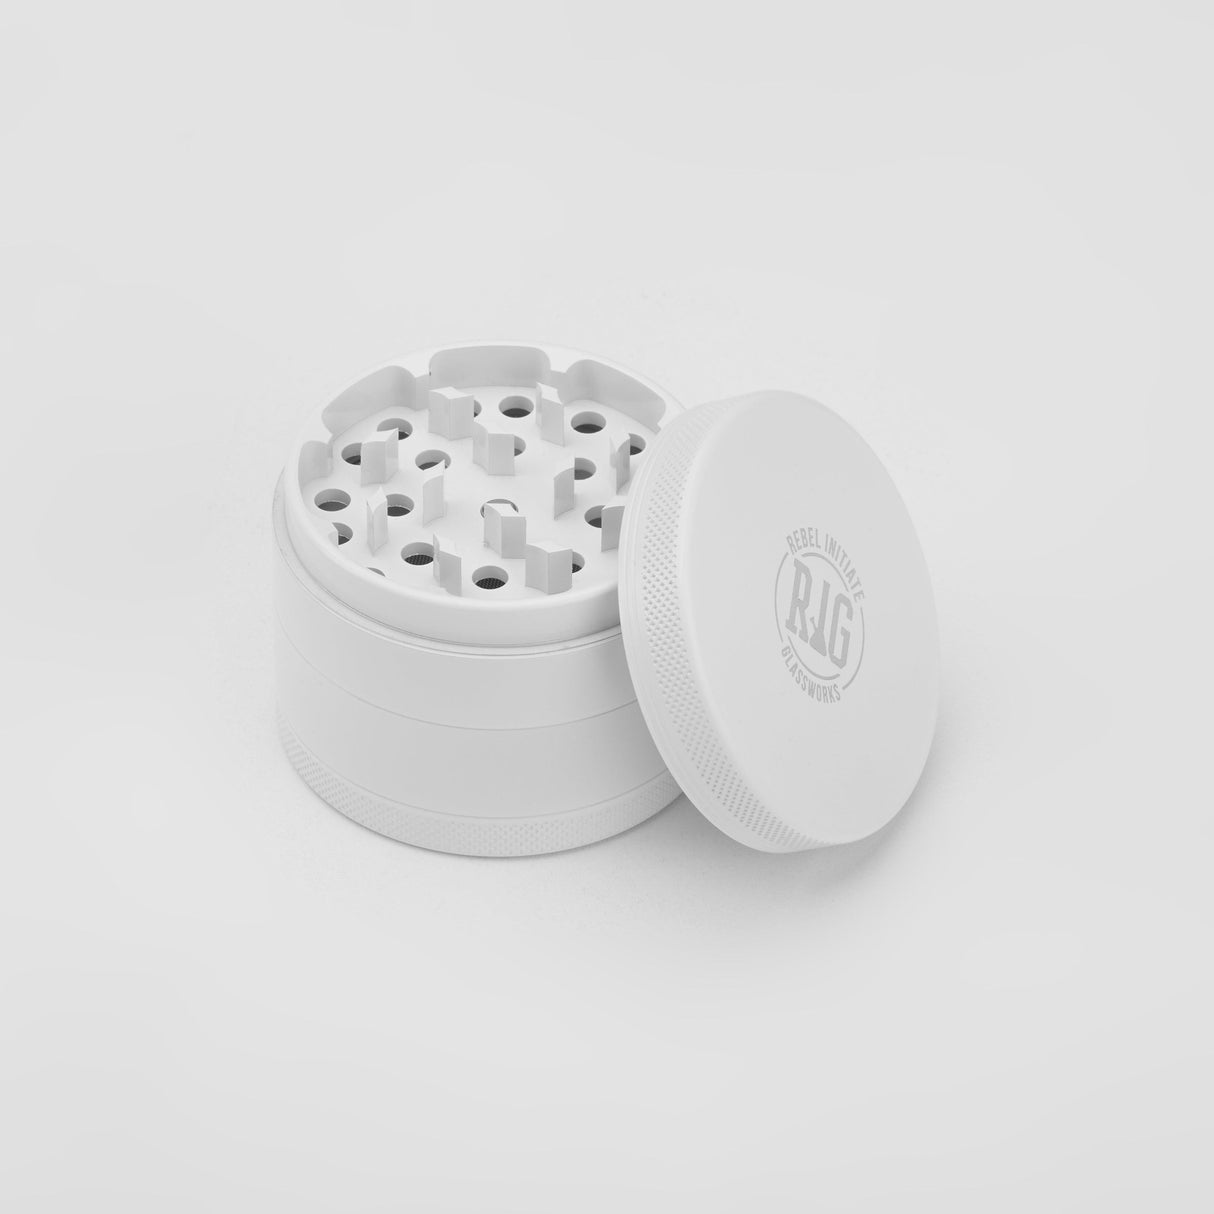 REBEL INITIATE GLASSWORKS 2.2" White Ceramic-Coated Aluminum Grinder for Dry Herbs